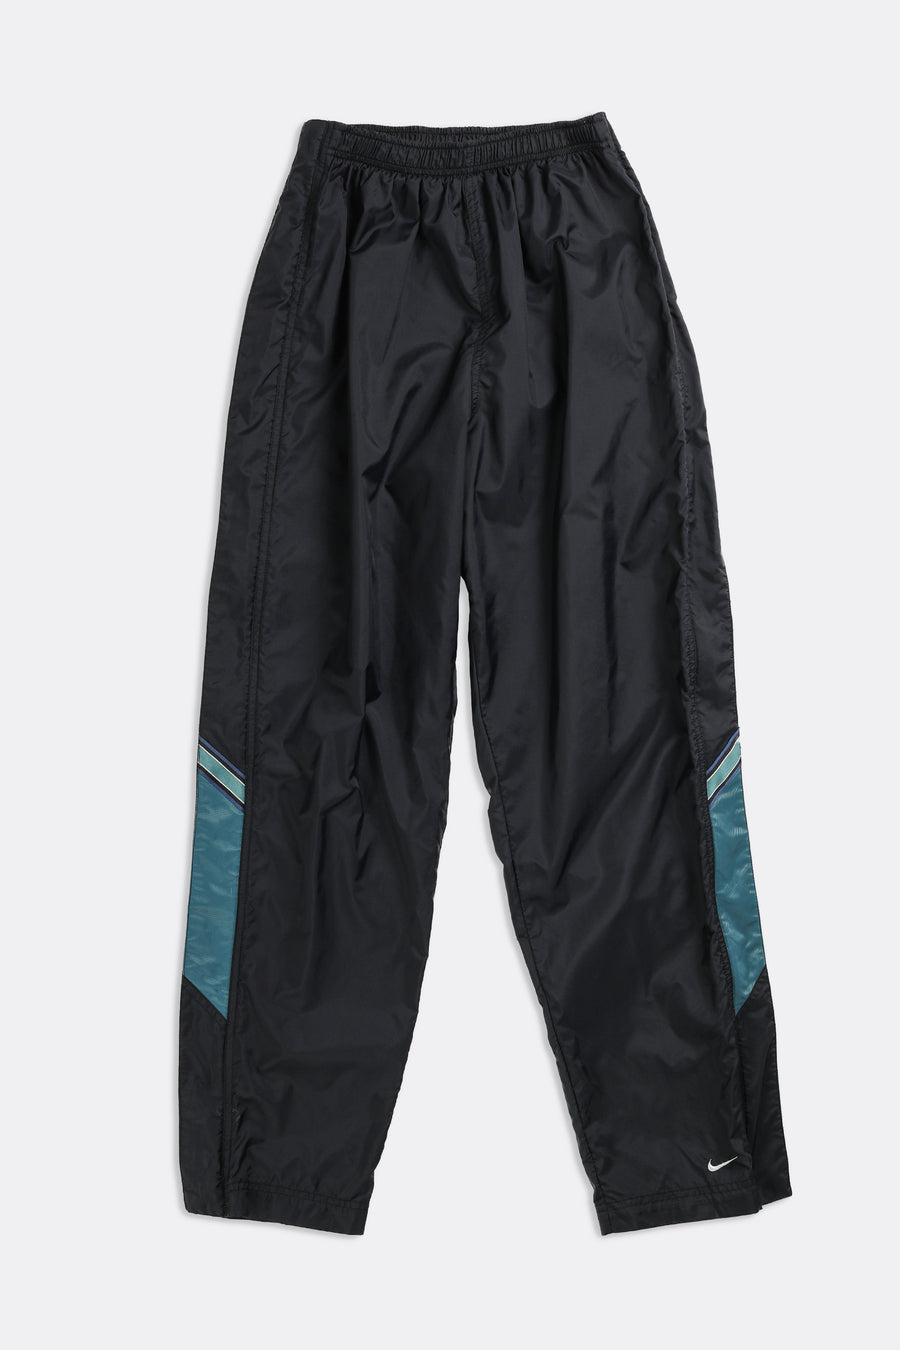 Vintage Nike Windbreaker Pants - XS